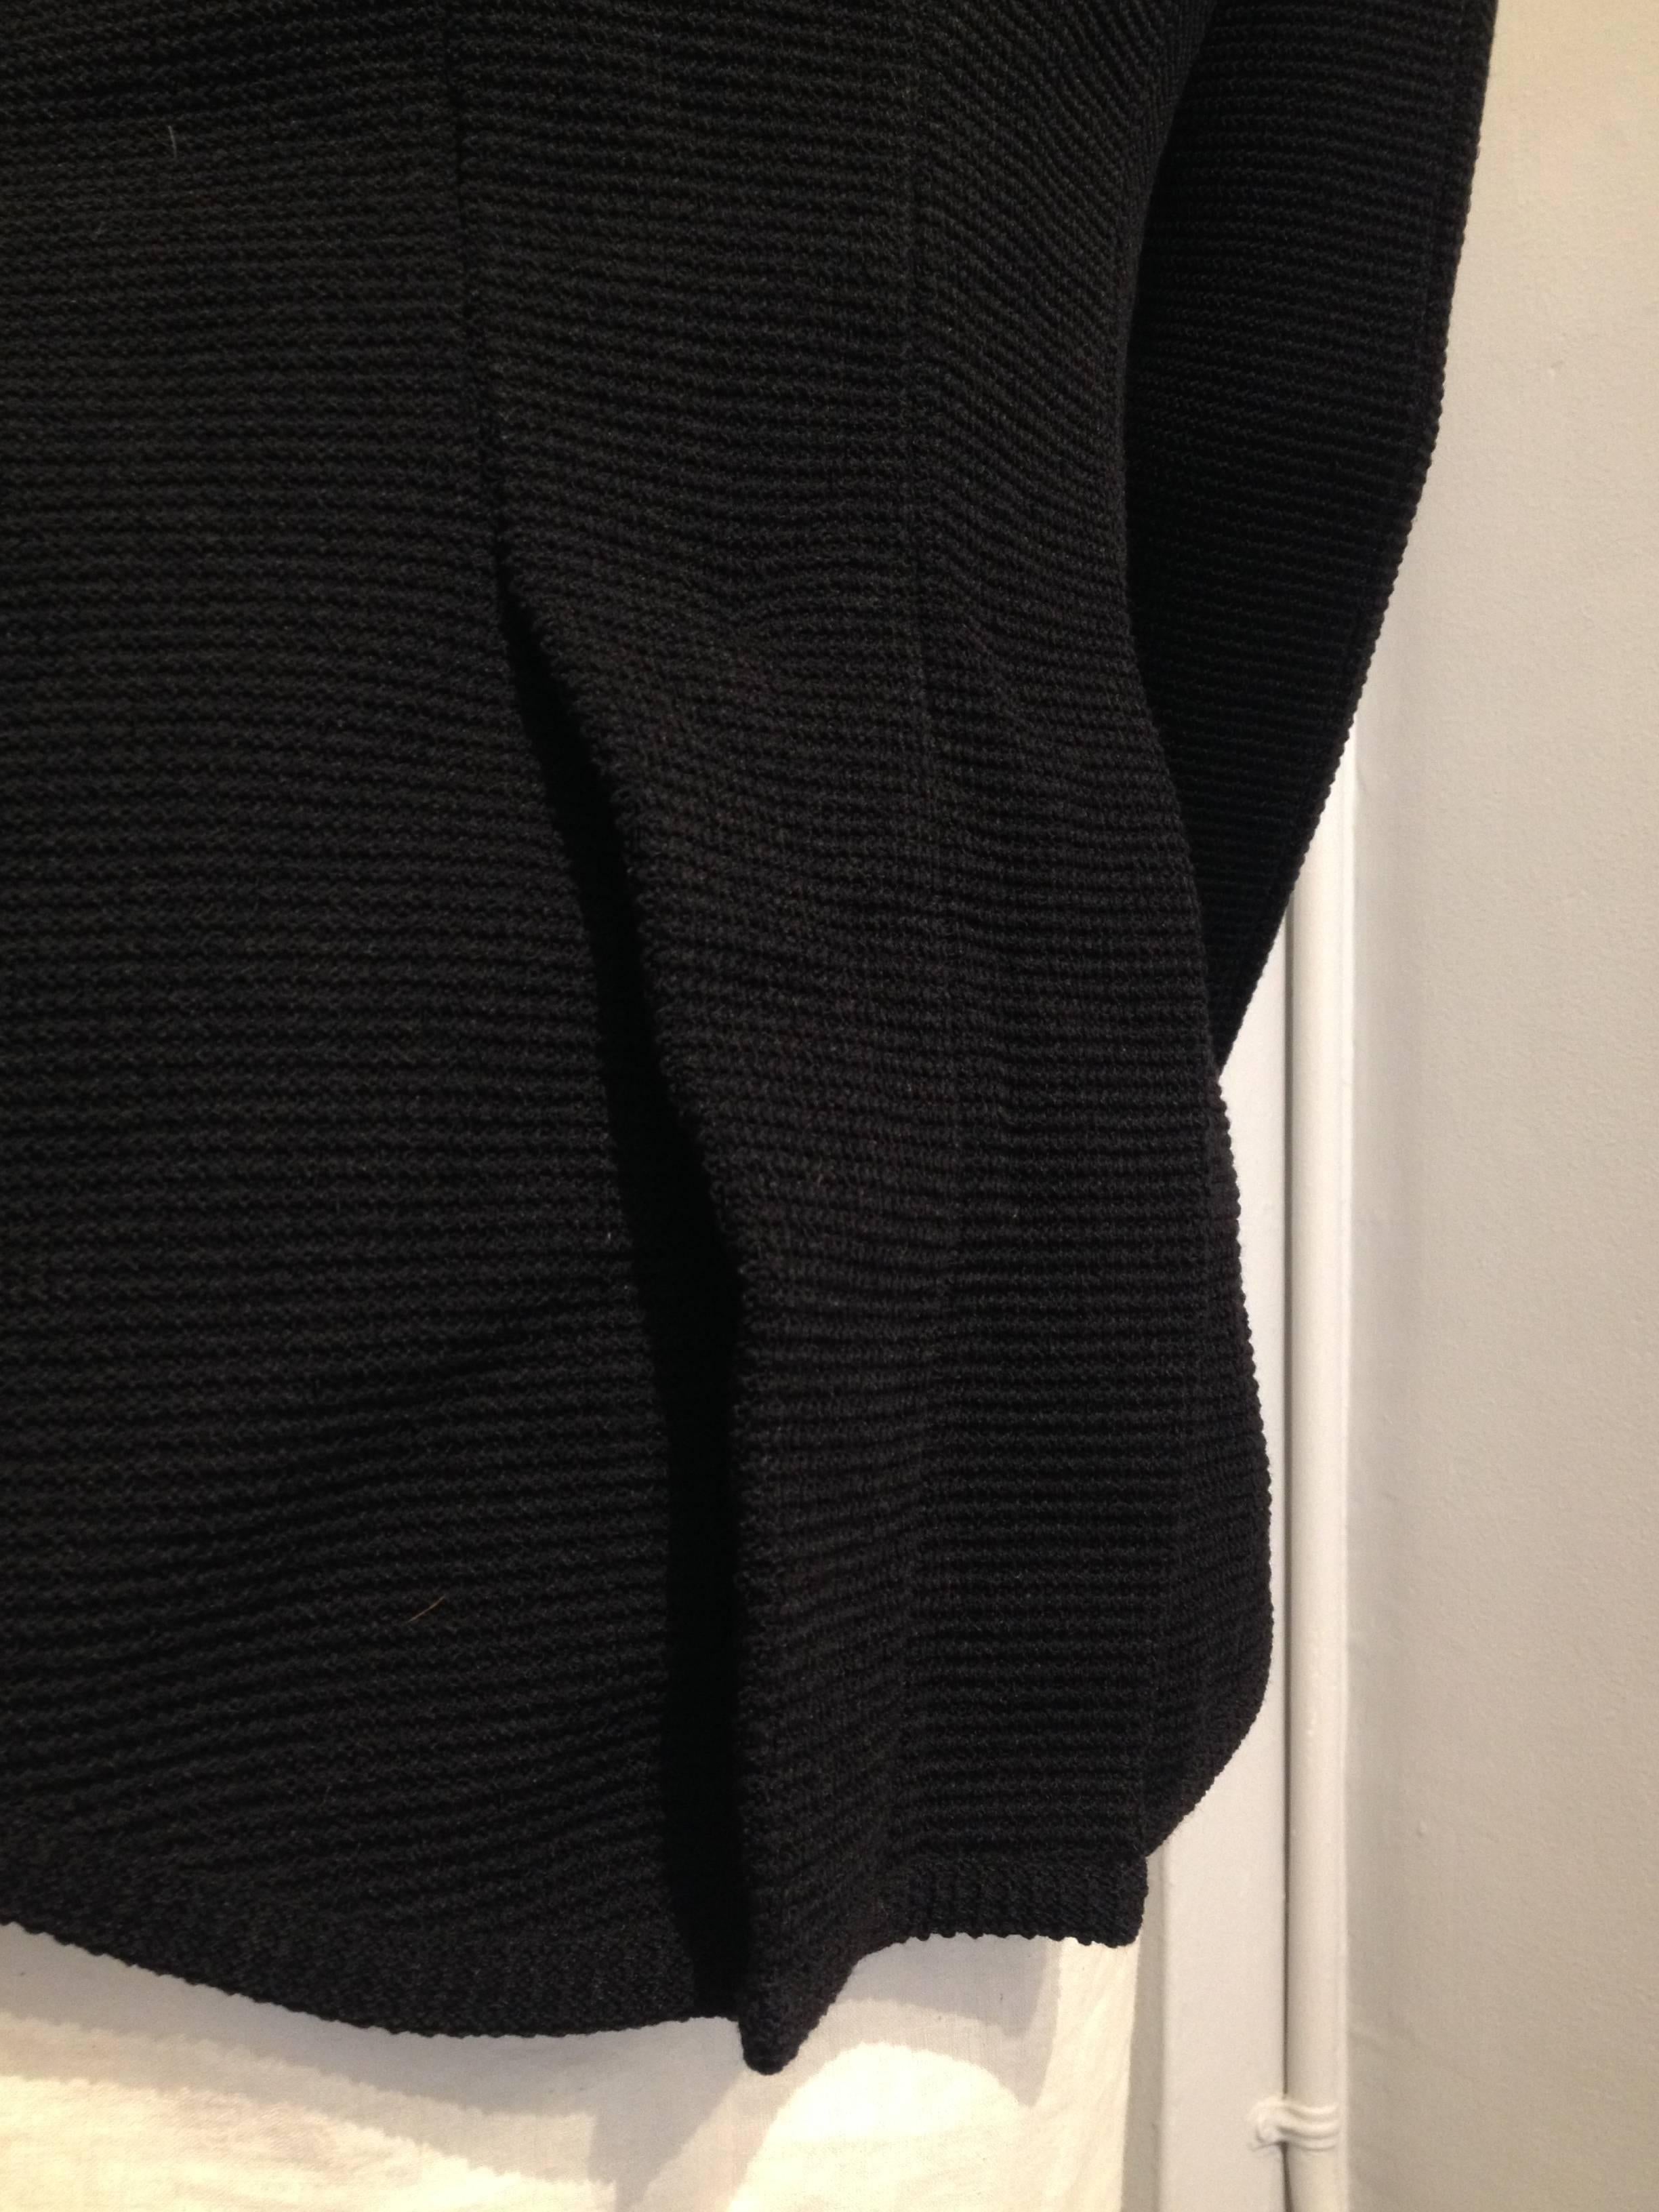 Givenchy Black Knit Blazer Size XS 4